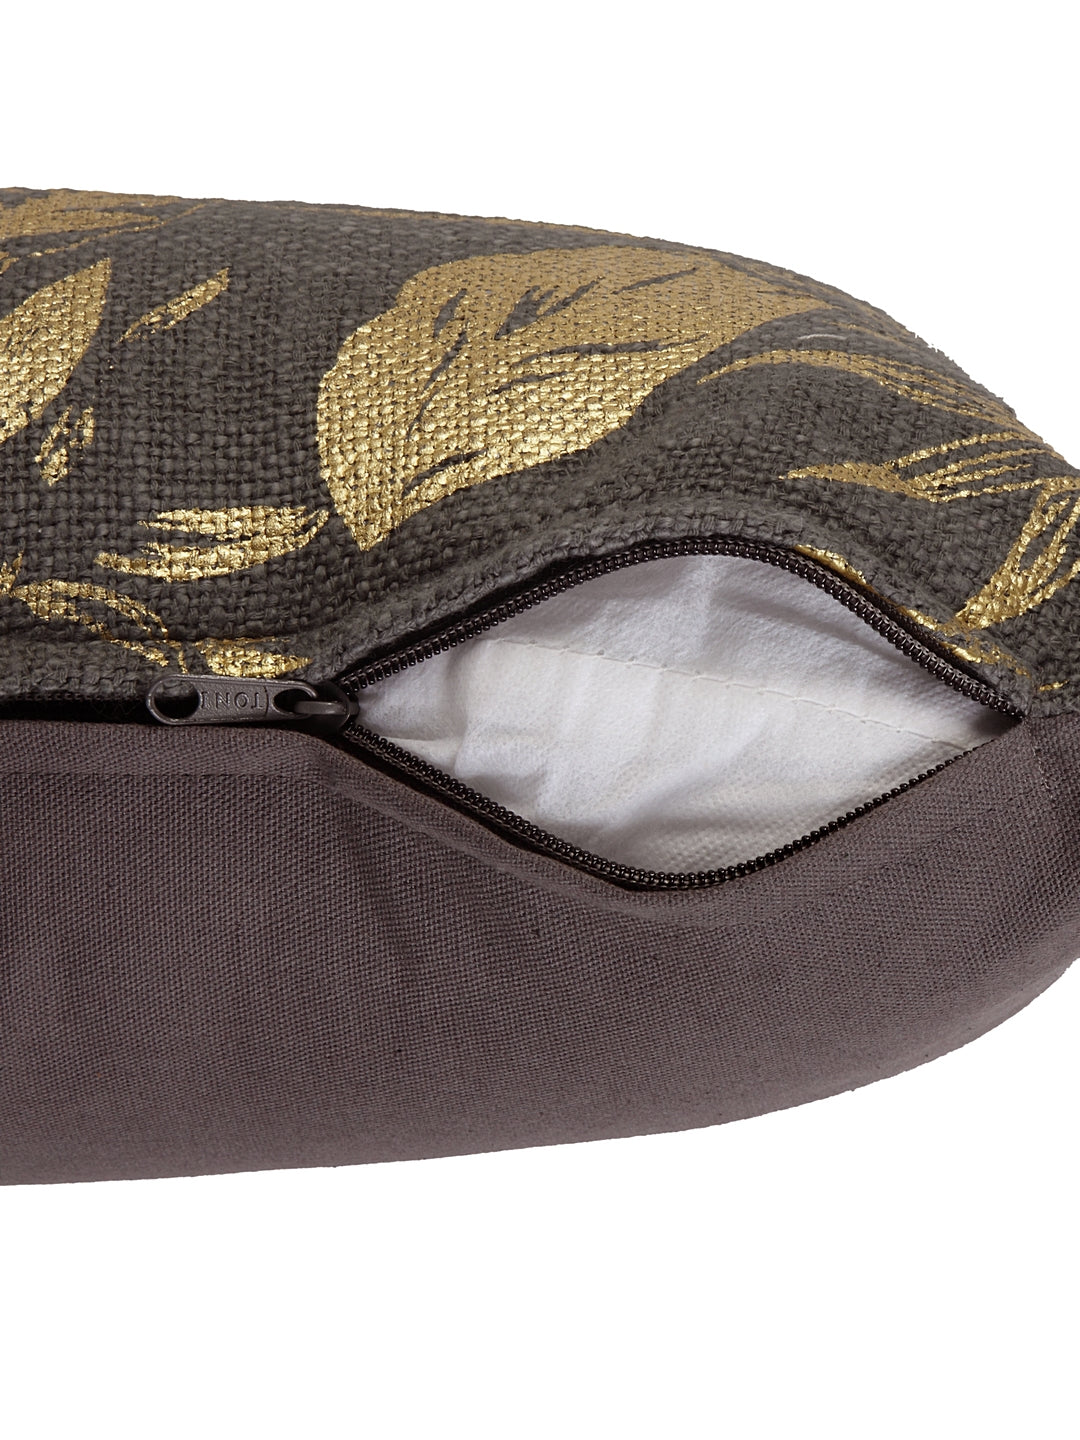 Shimmer Garden Cushion Cover with Filler 30x50cm